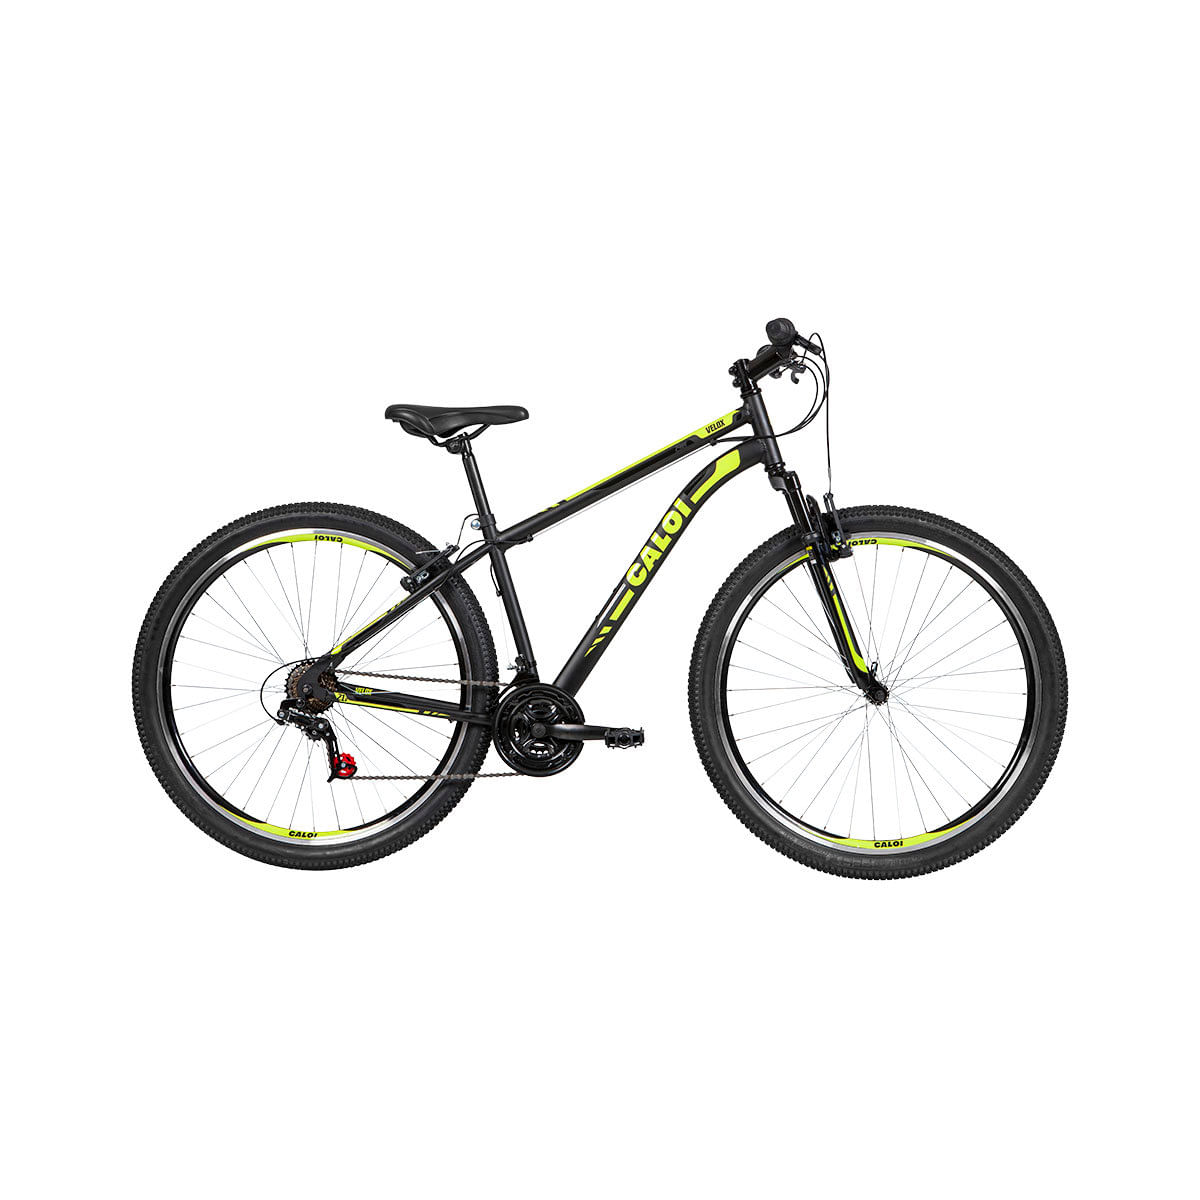 Menor preço em Bicicleta Aro 29 Caloi 21 Marchas Velox V-Brake Mountain Bike Preta